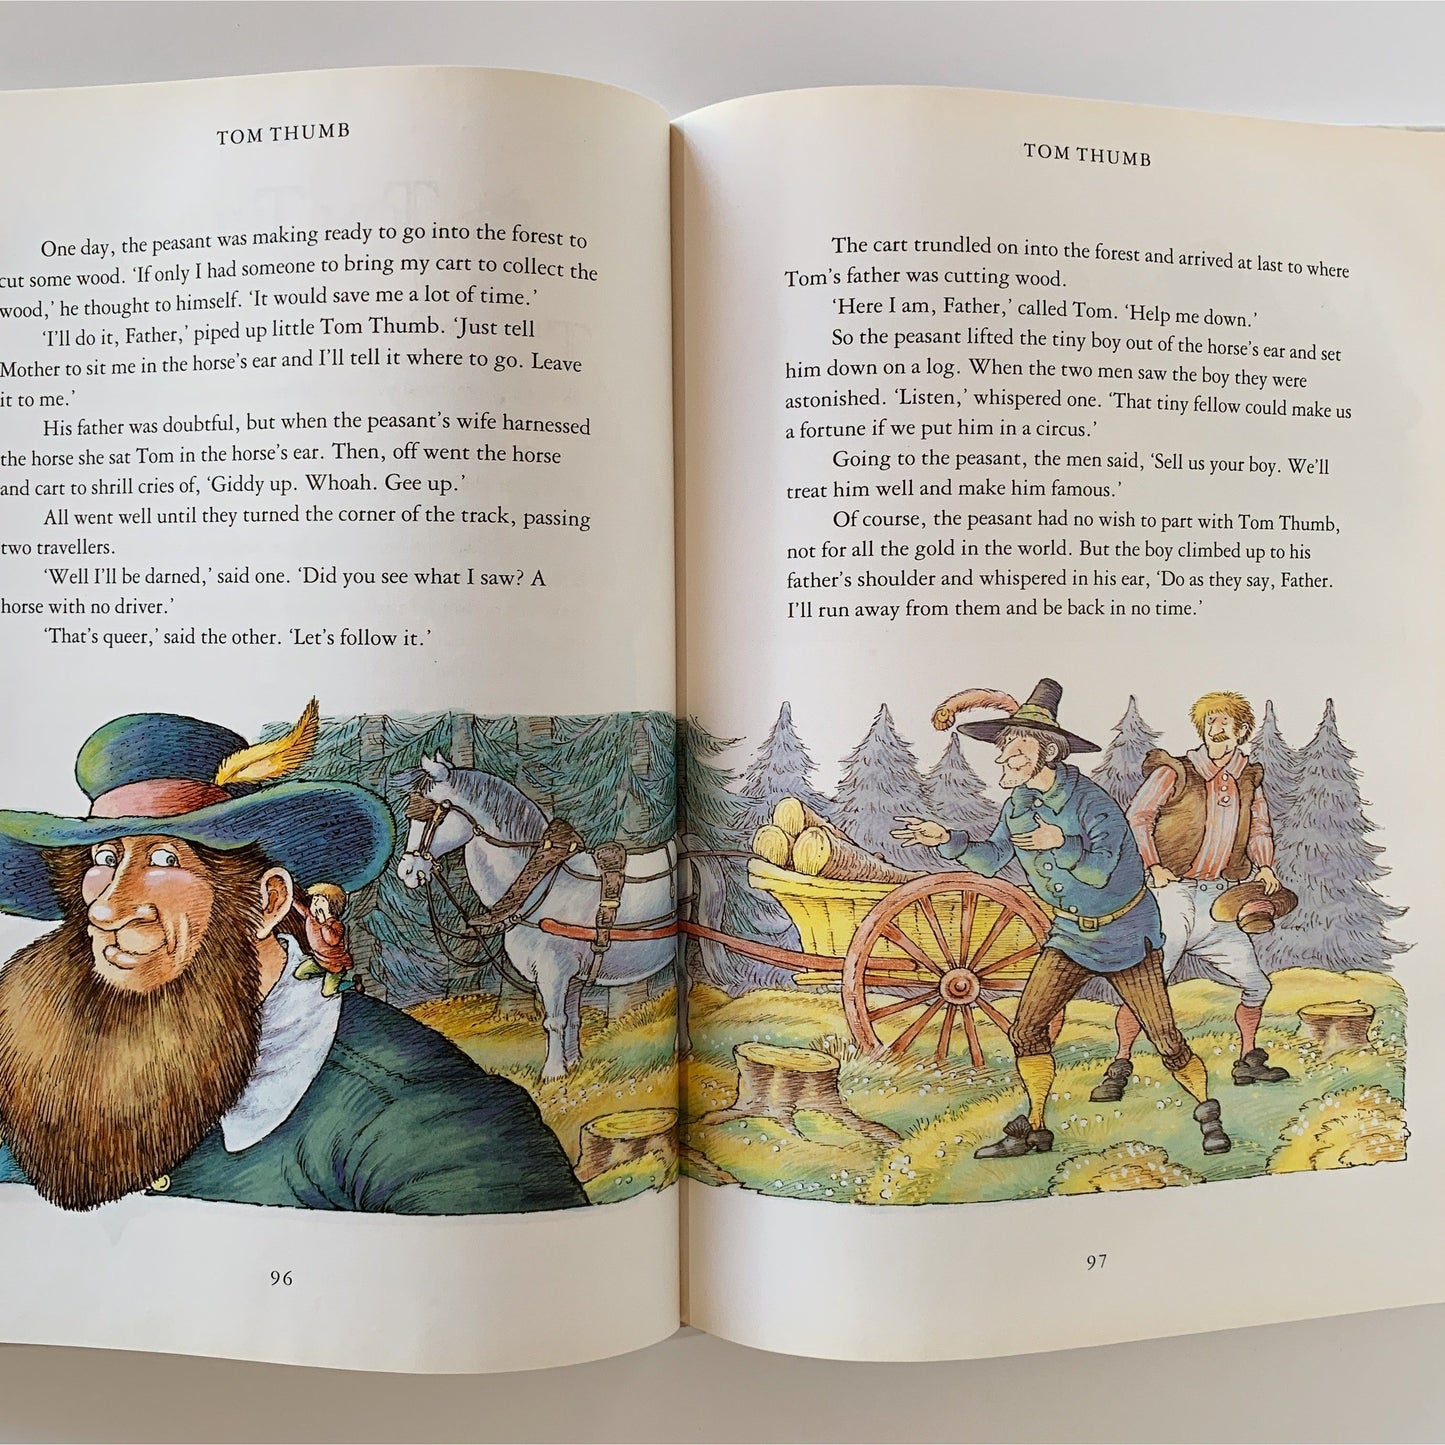 Fairy Tales Retold by James Riordan, 1988 Hardcover